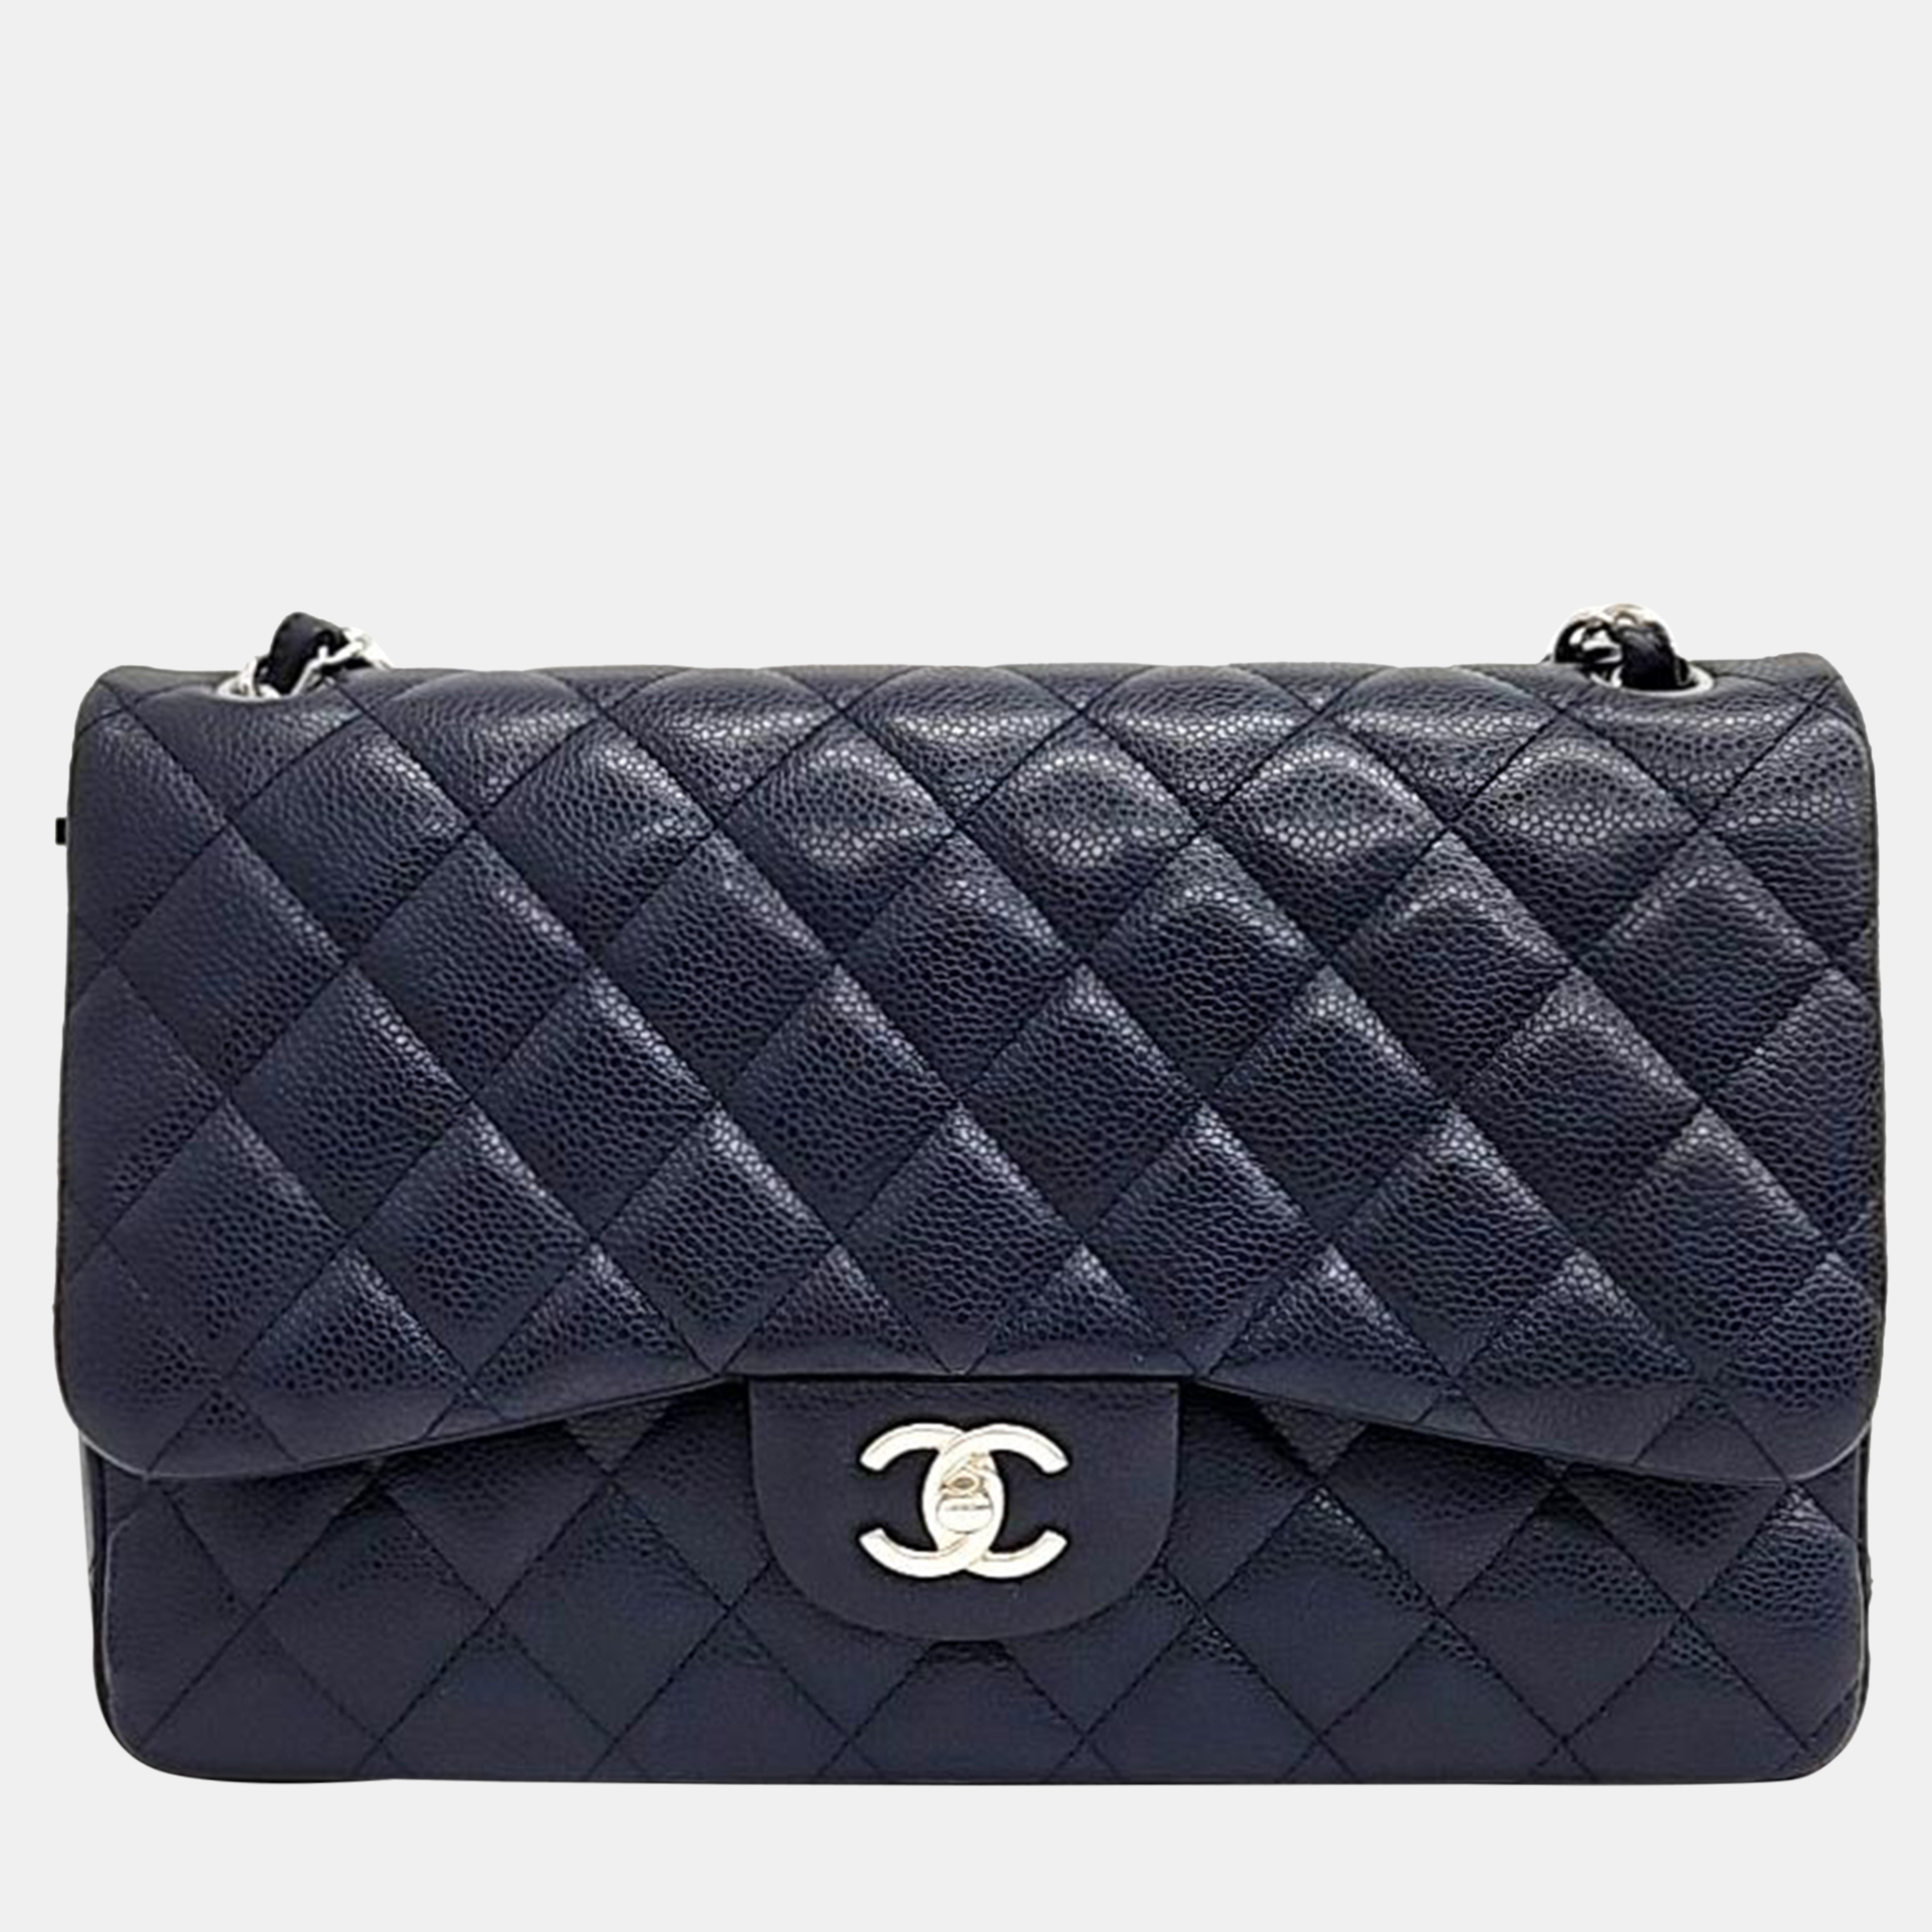 Chanel navy blue caviar leather classic jumbo bag